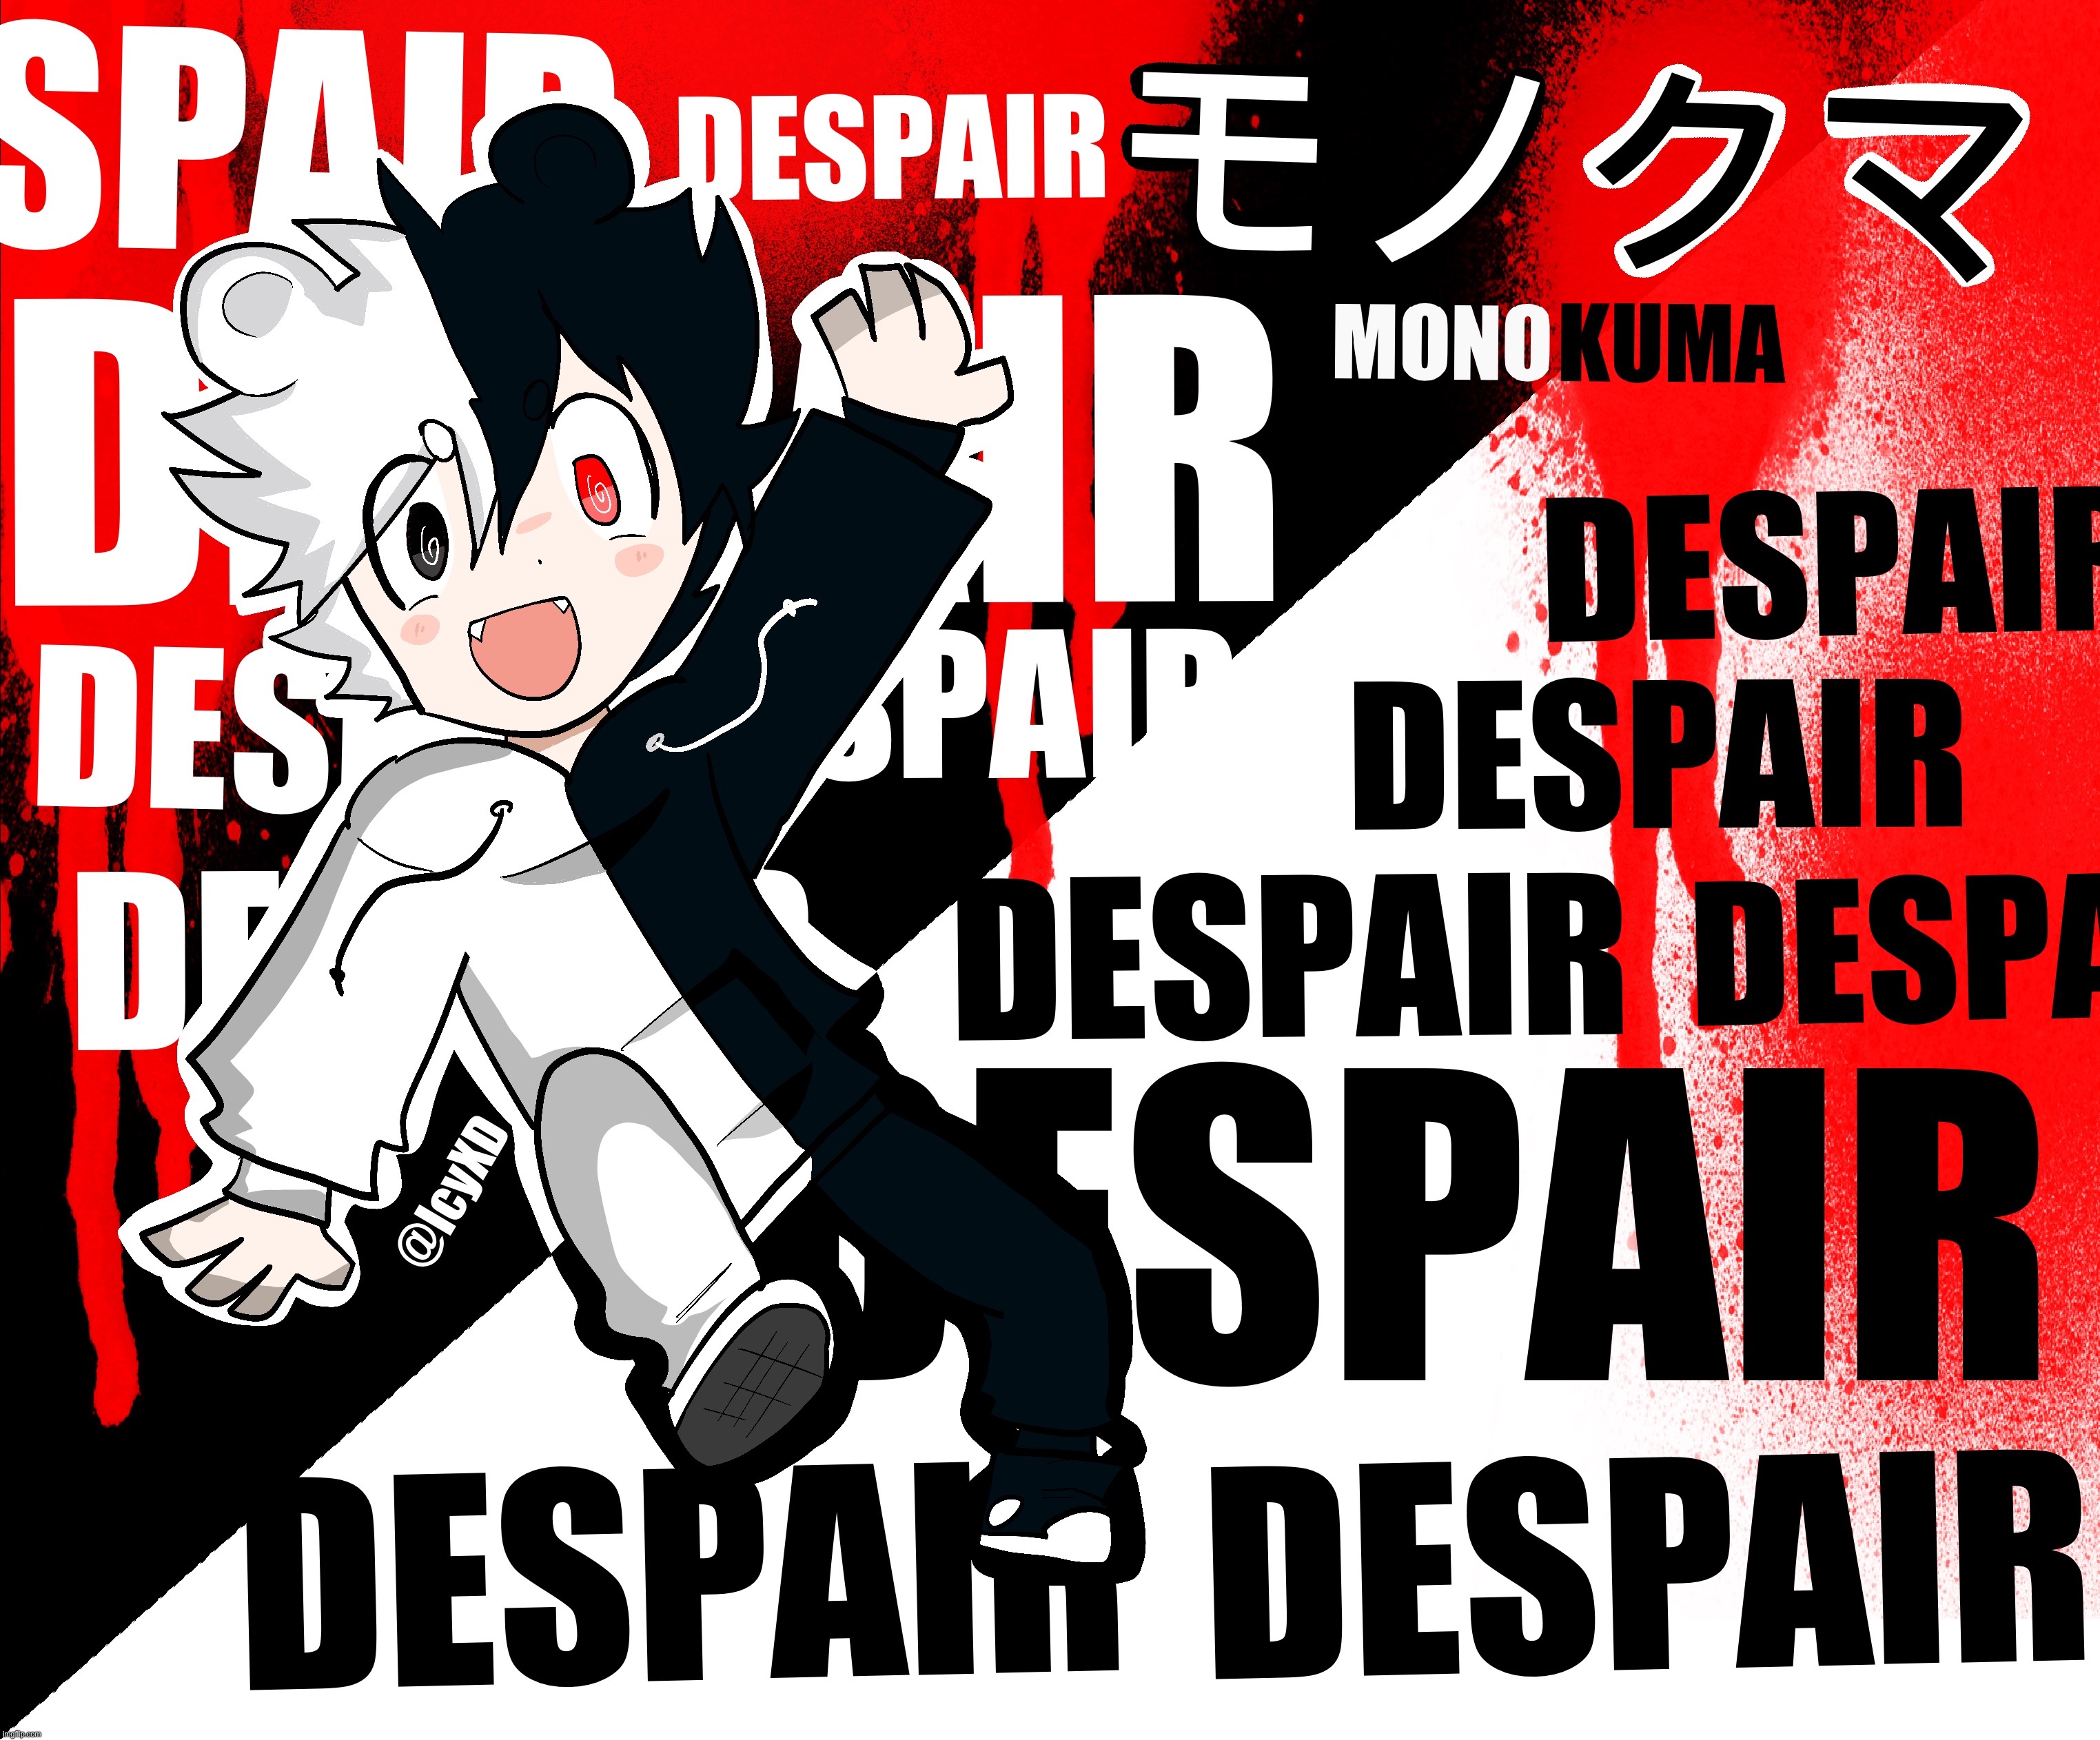 Monokuma art print i made at 12:00 last night! What do you think? | image tagged in danganronpa,monokuma,teddy bear,black and white,anime,despair | made w/ Imgflip meme maker